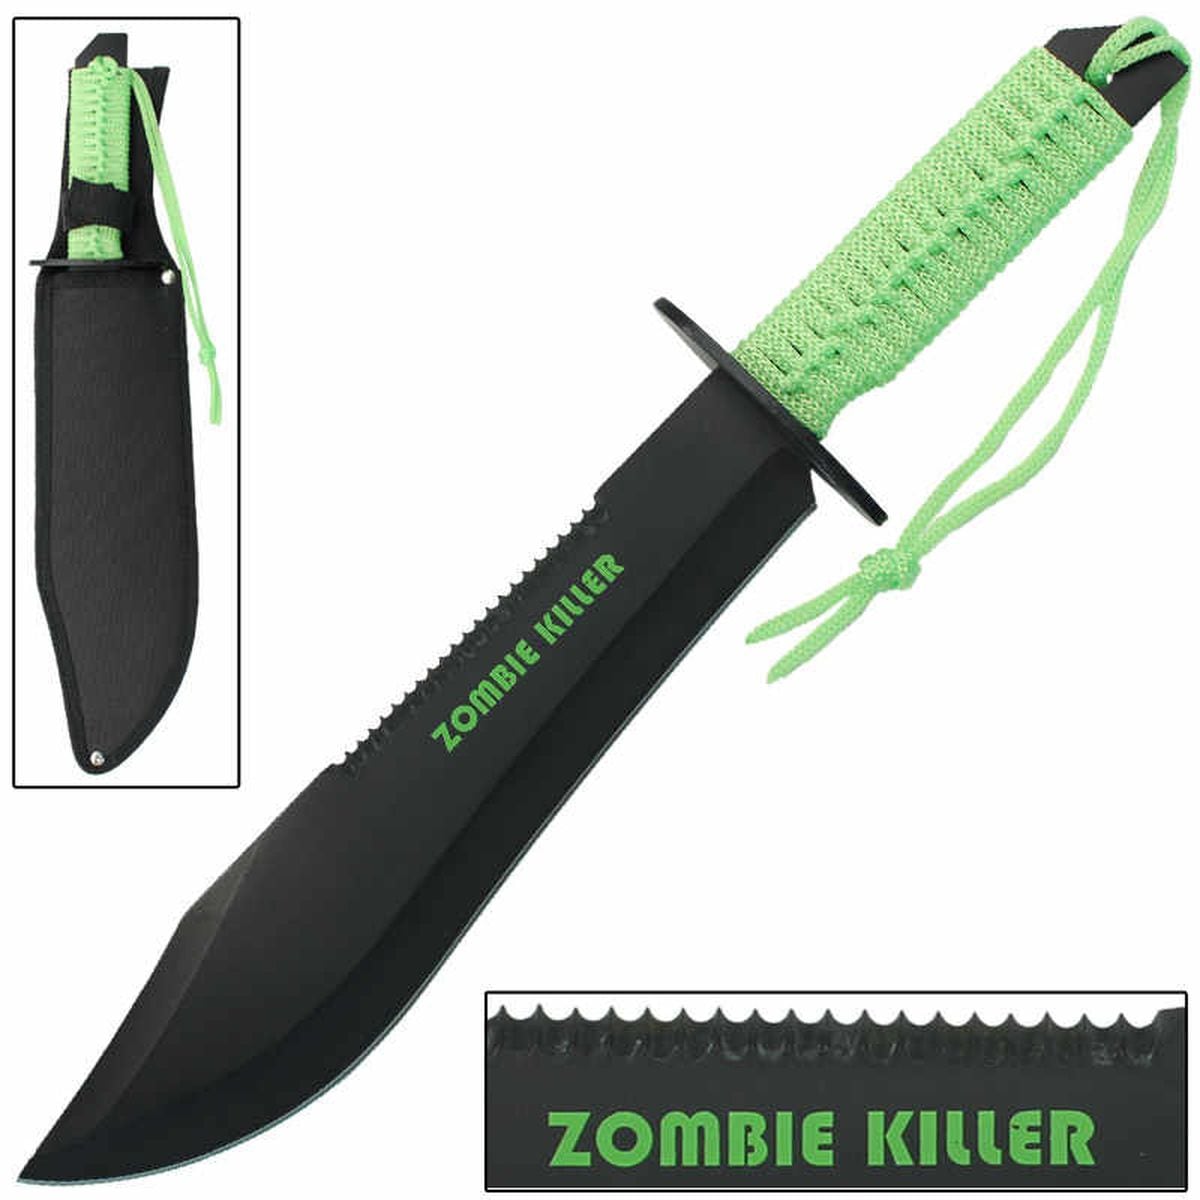 Killer нож. Нож Боуи зеленый. Zombie Killer Knife. Нож зомби киллер. Нож военный зеленый.